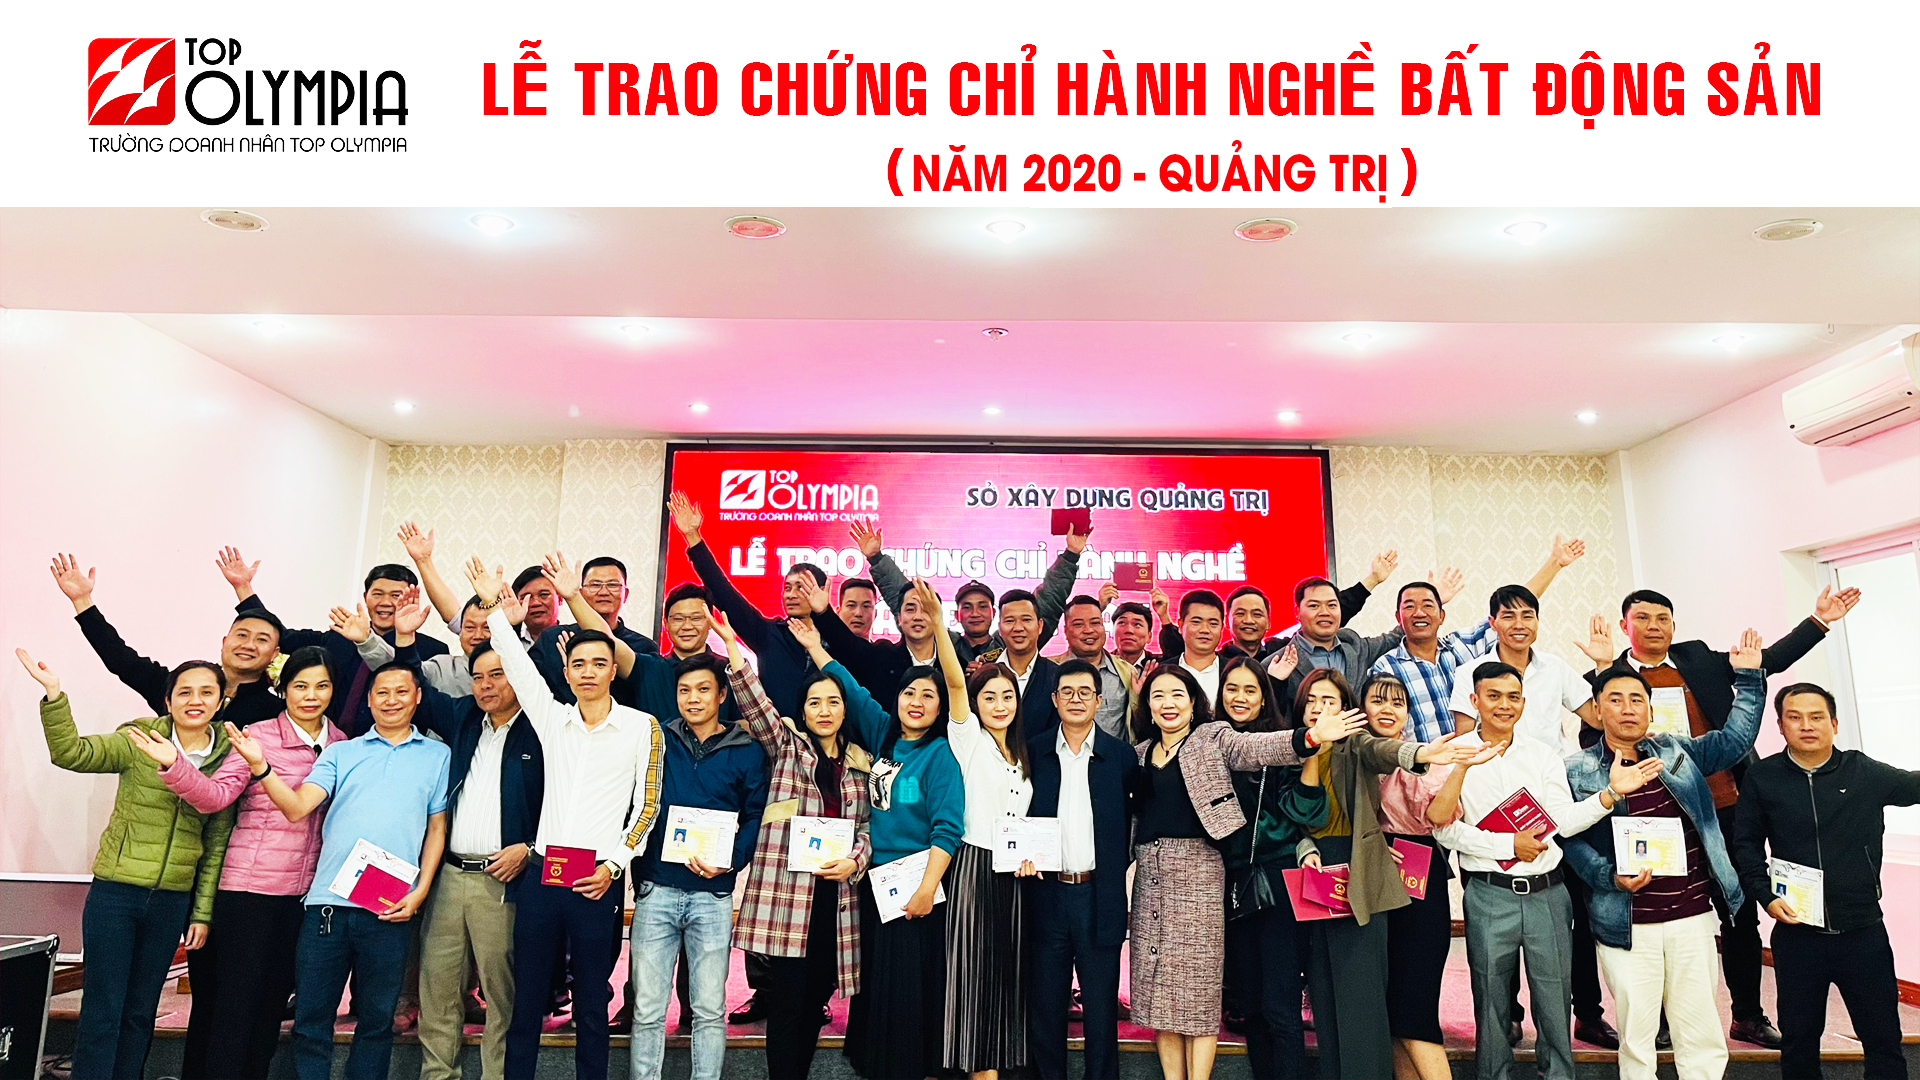 Quang Tri 2020